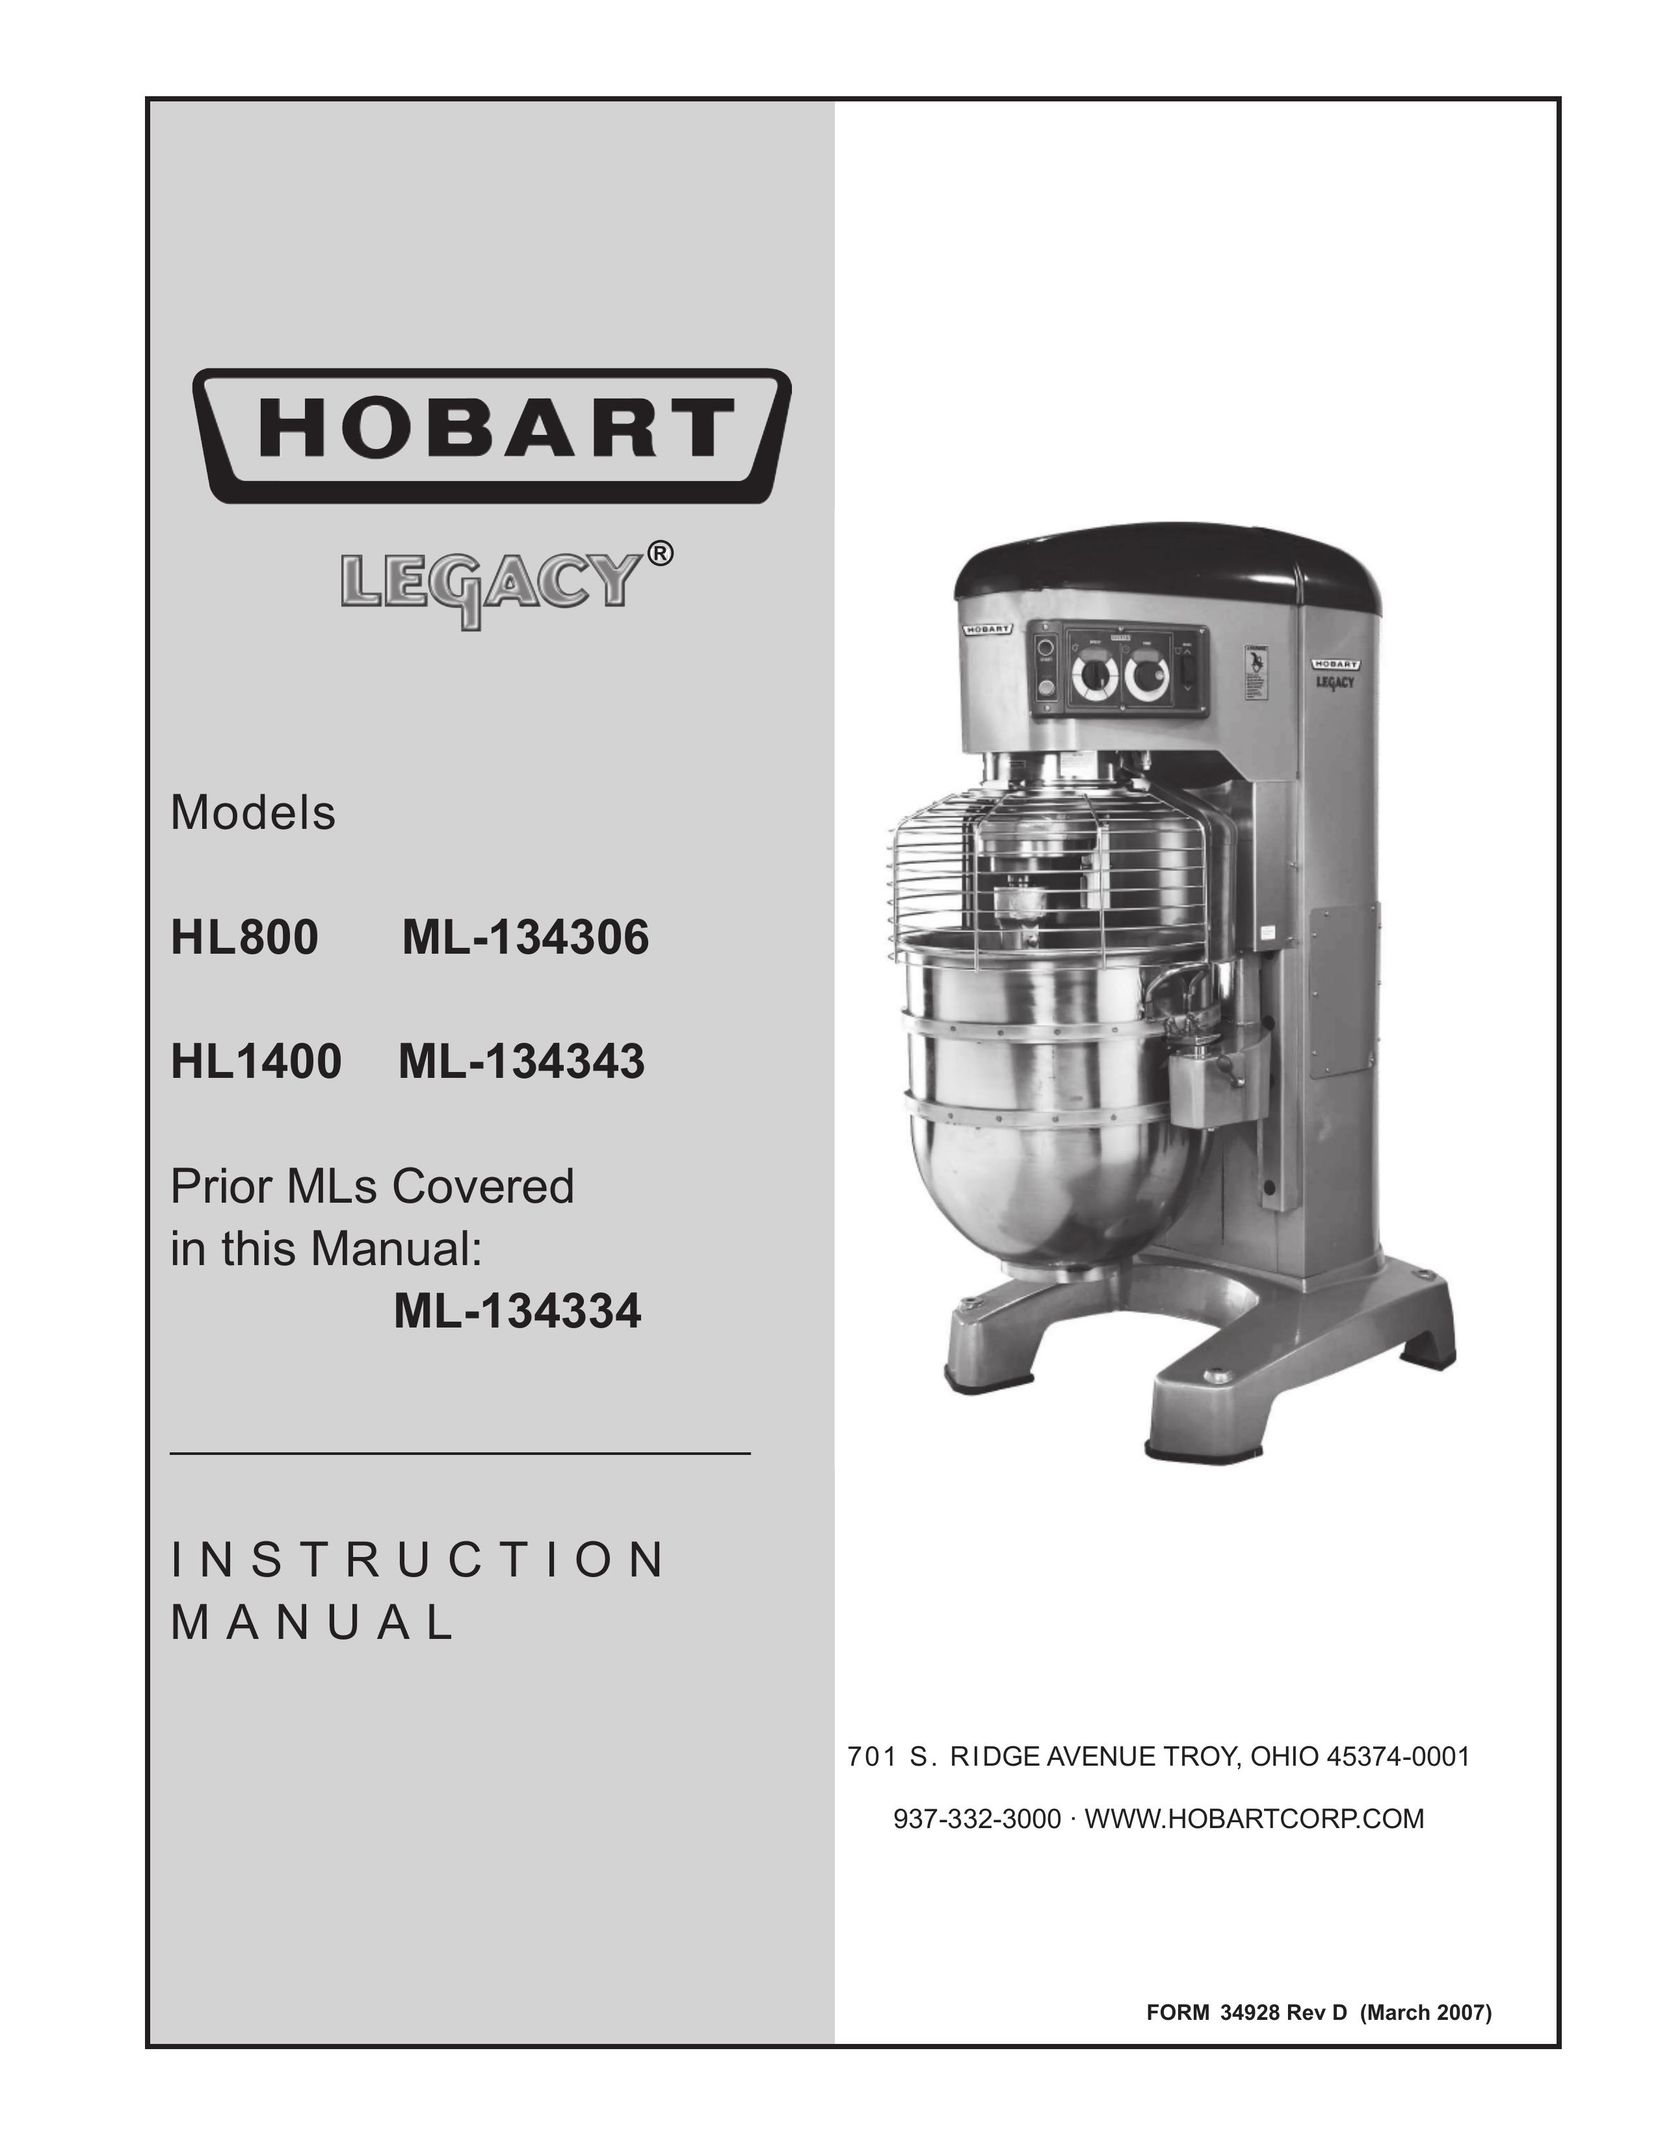 Hobart ML-134306 Mixer User Manual